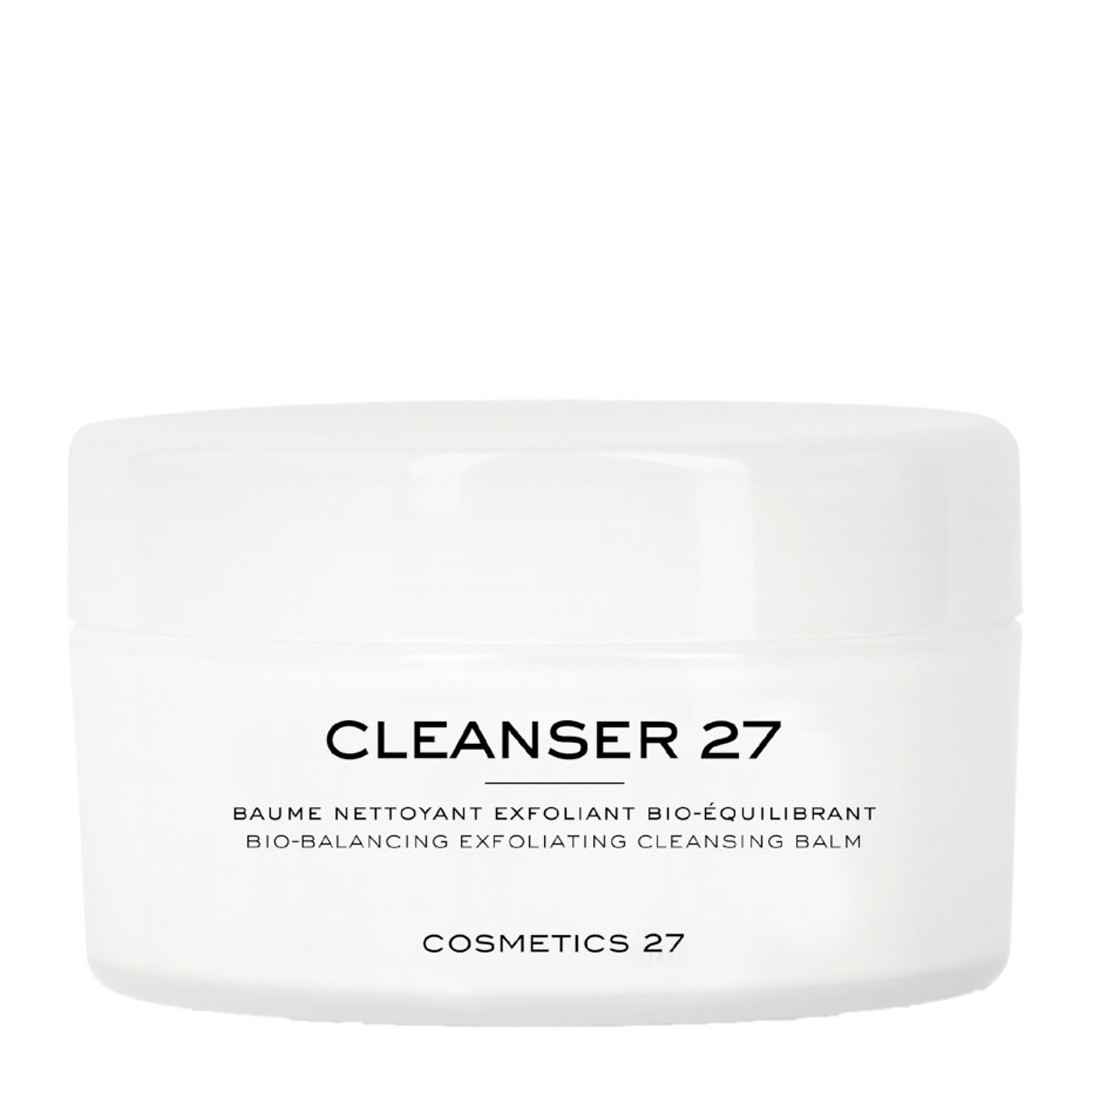 Cosmetics 27 Cleanser 27 Bio-Vitalizing Cell Cleansing Balm - Биобальзам для очищения и баланса кожи